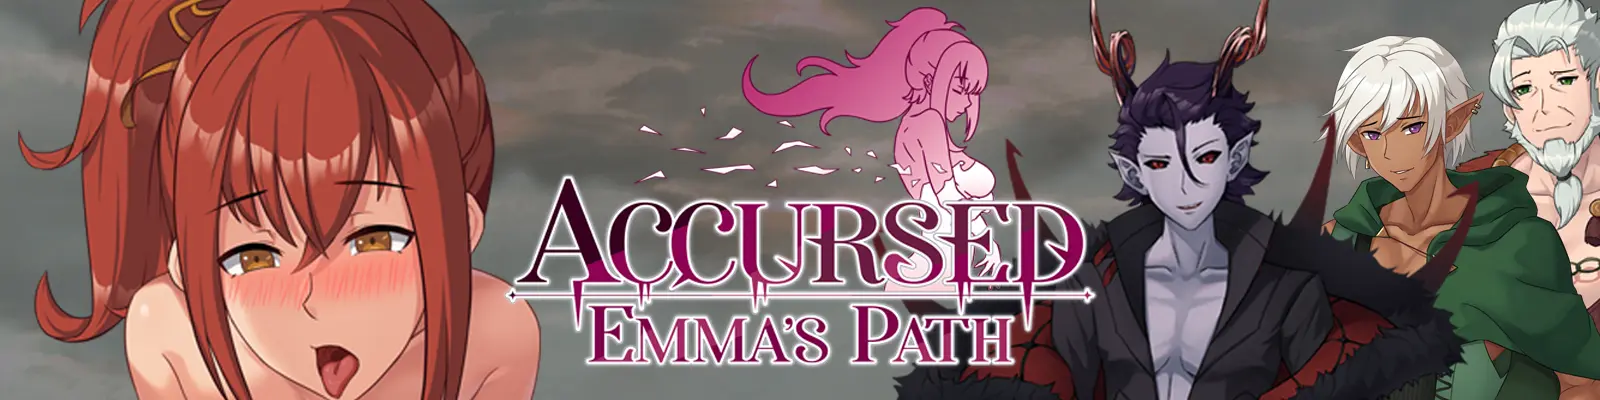 Accursed: Emma's Path main image